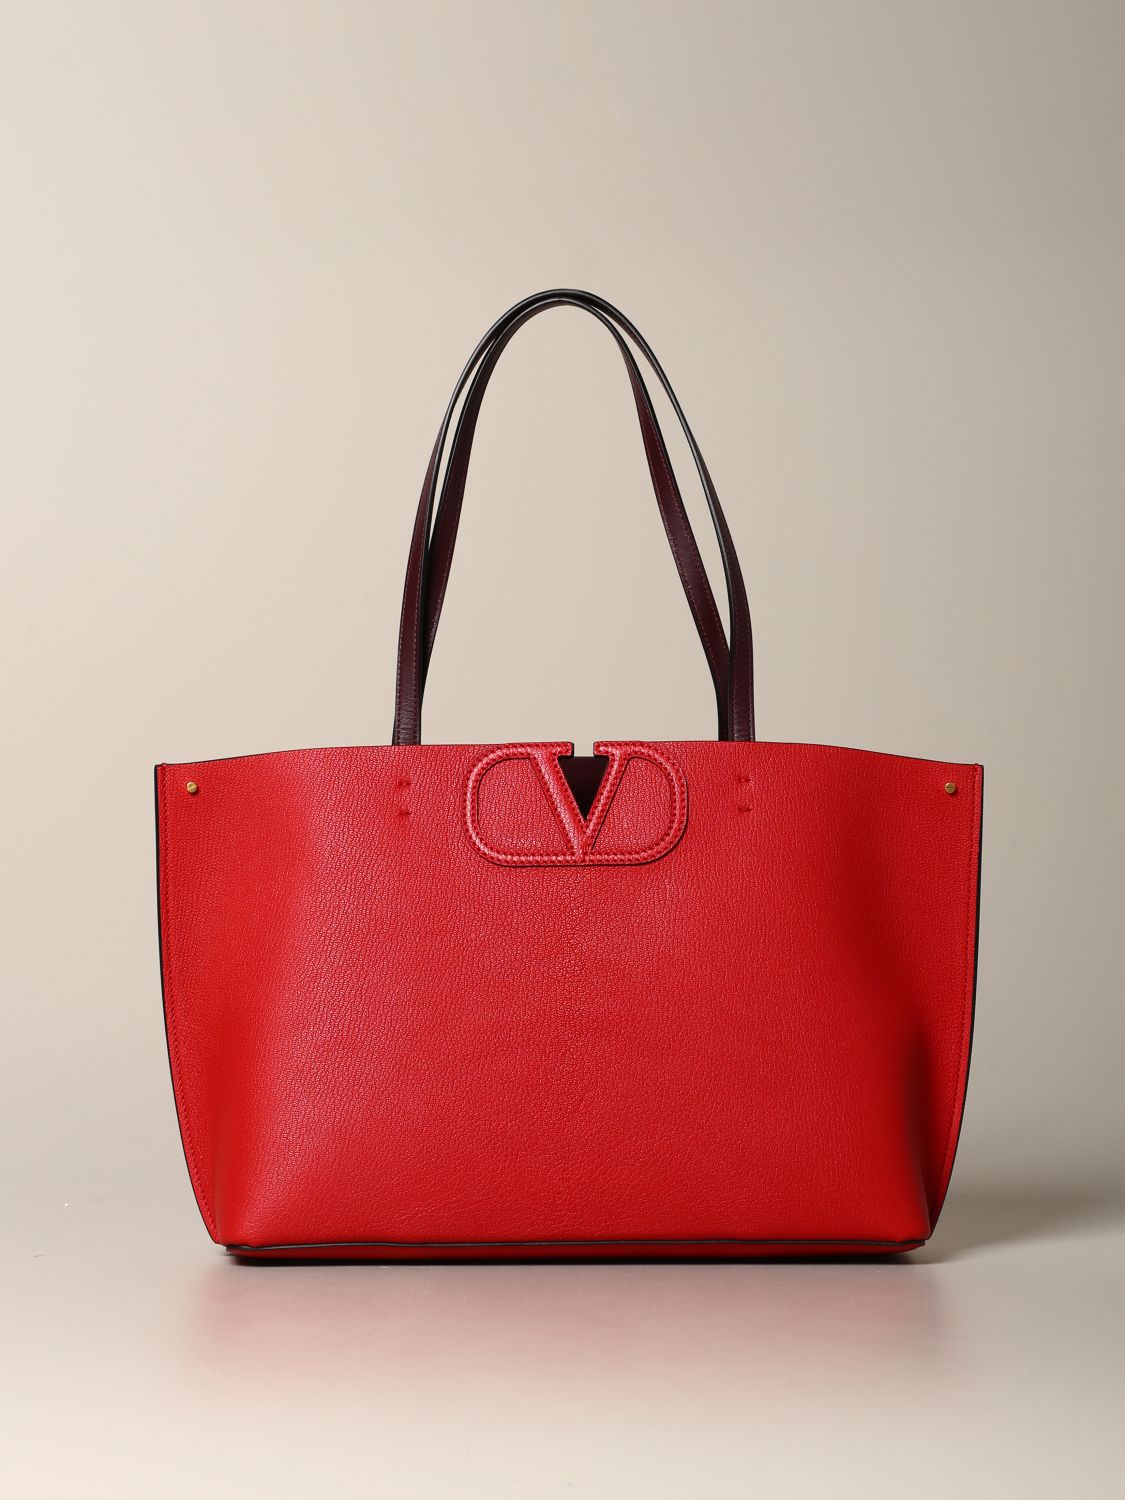 Verrast studie gevechten Valentino Garavani Outlet: Medium shopping bag in leather - Red | Valentino  Garavani tote bags TW2B0F95 FQJ online on GIGLIO.COM